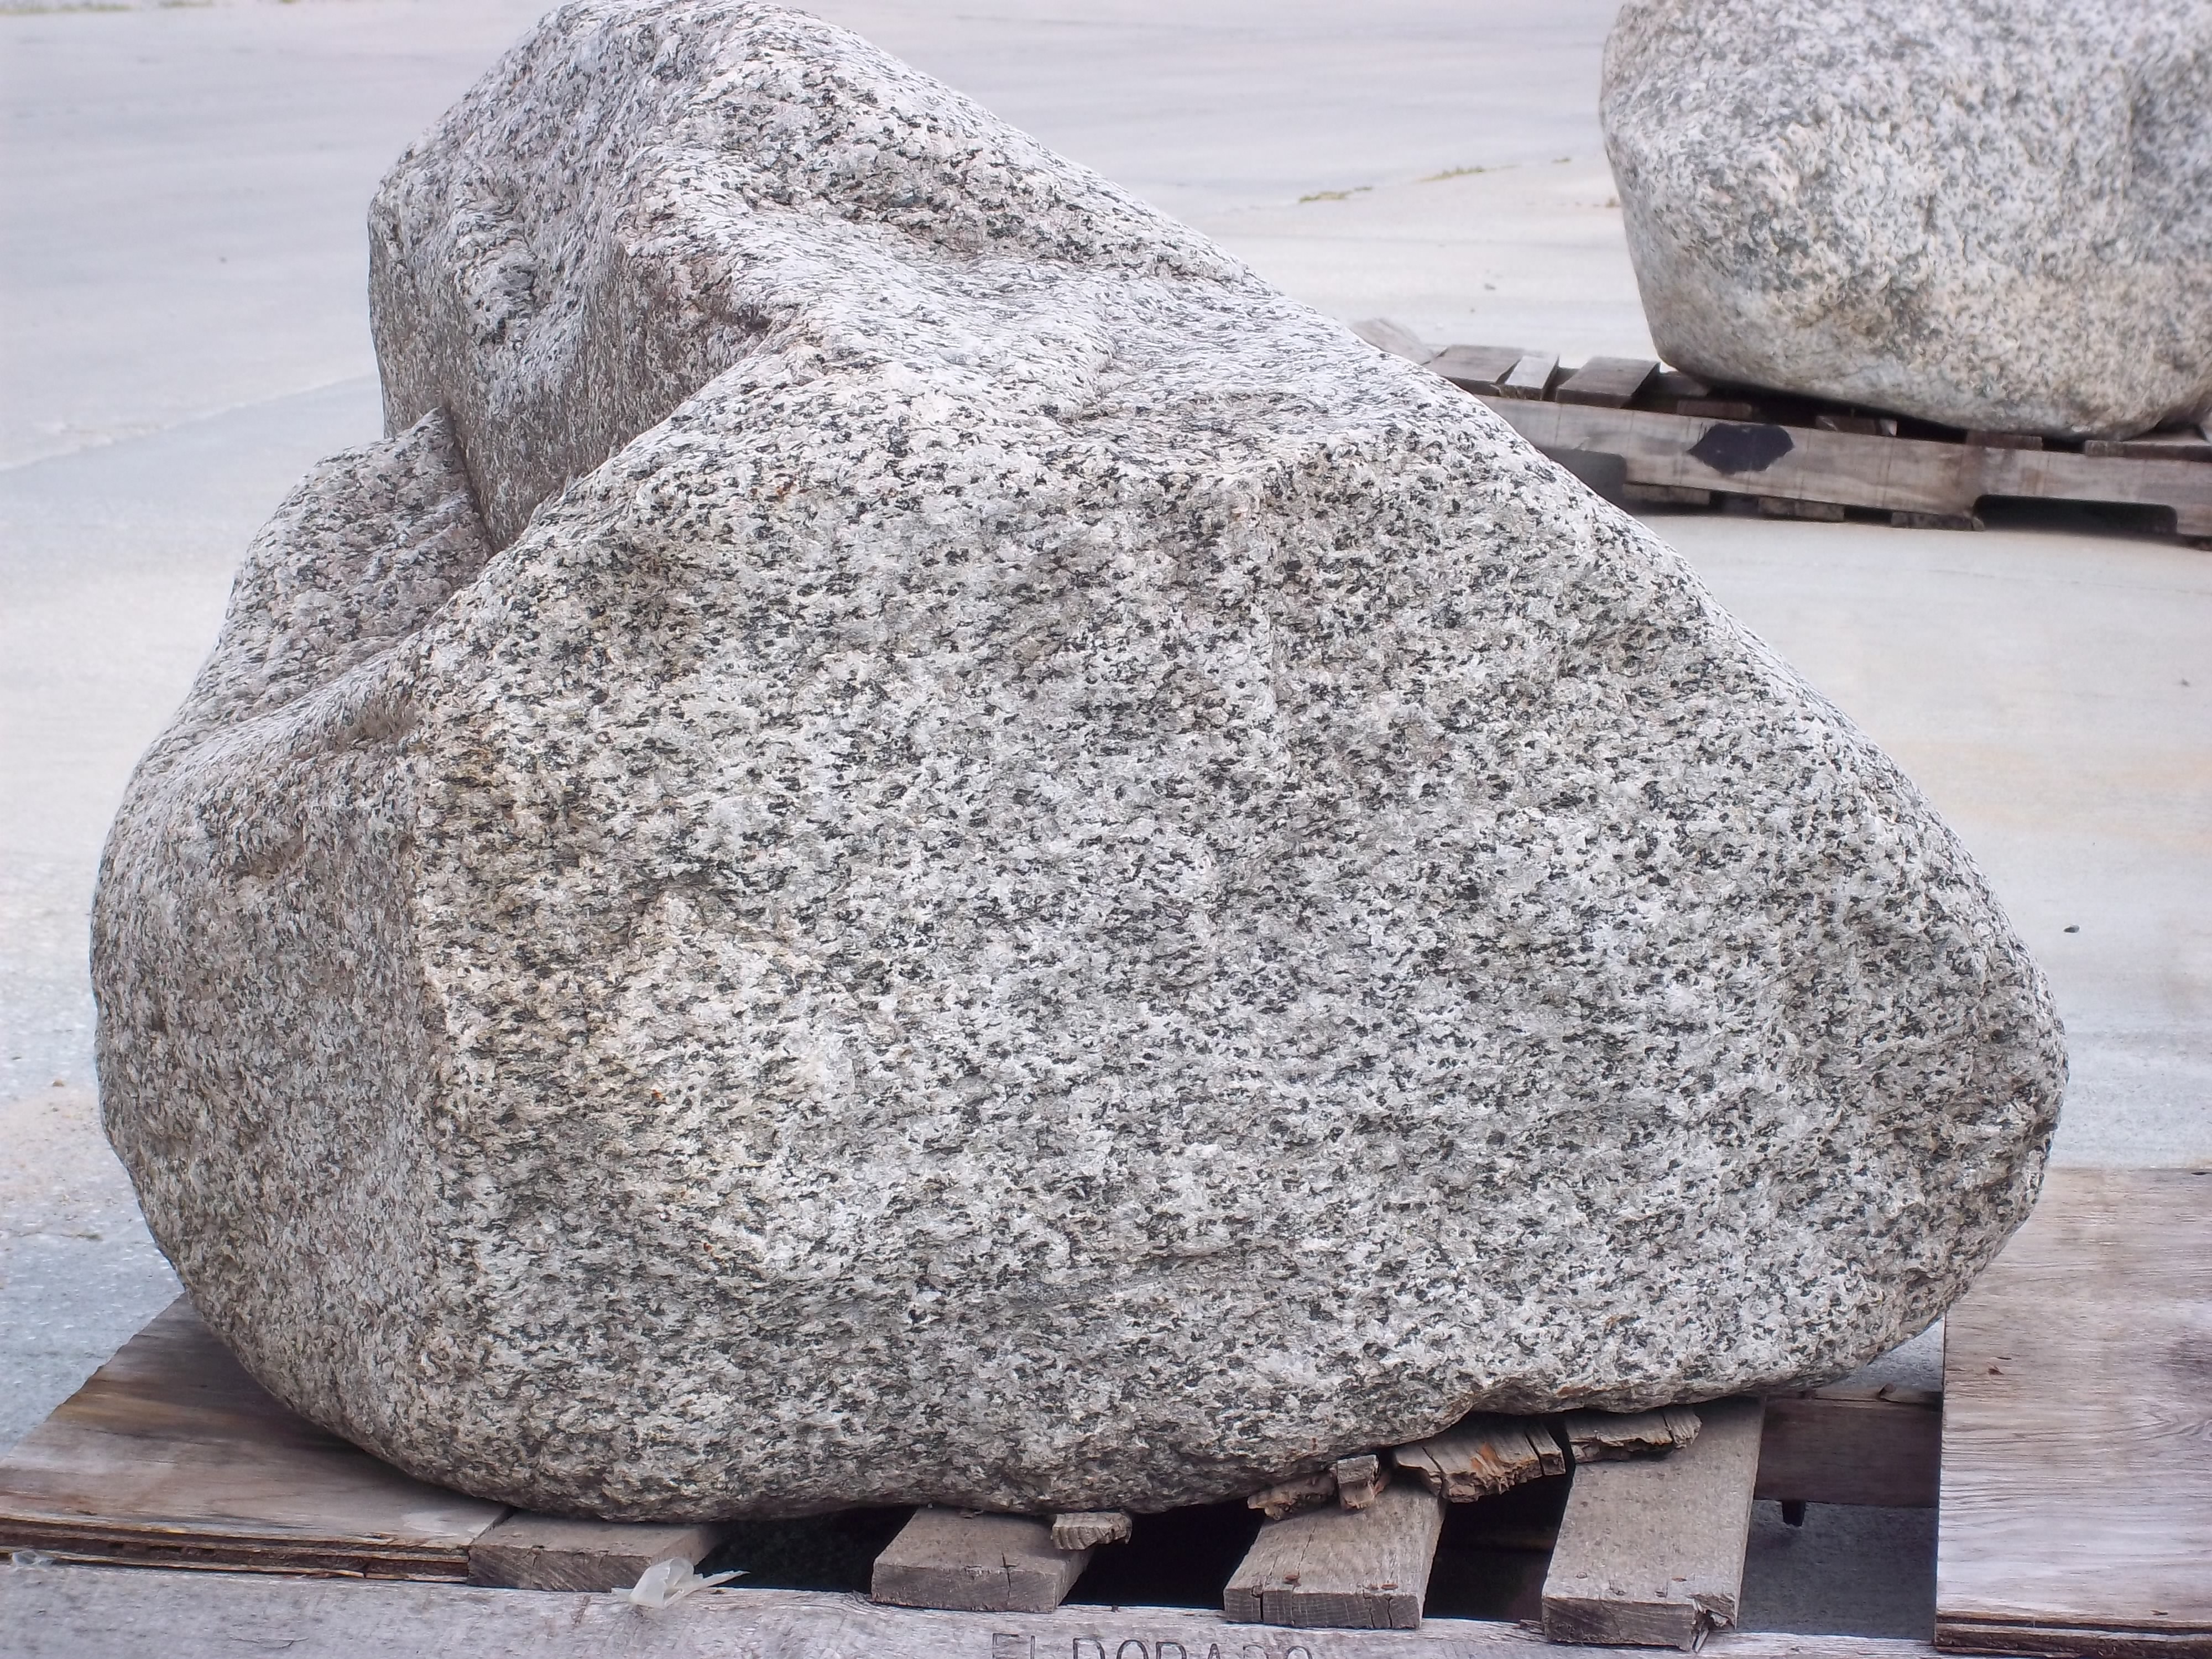 granite-boulder2.jpg